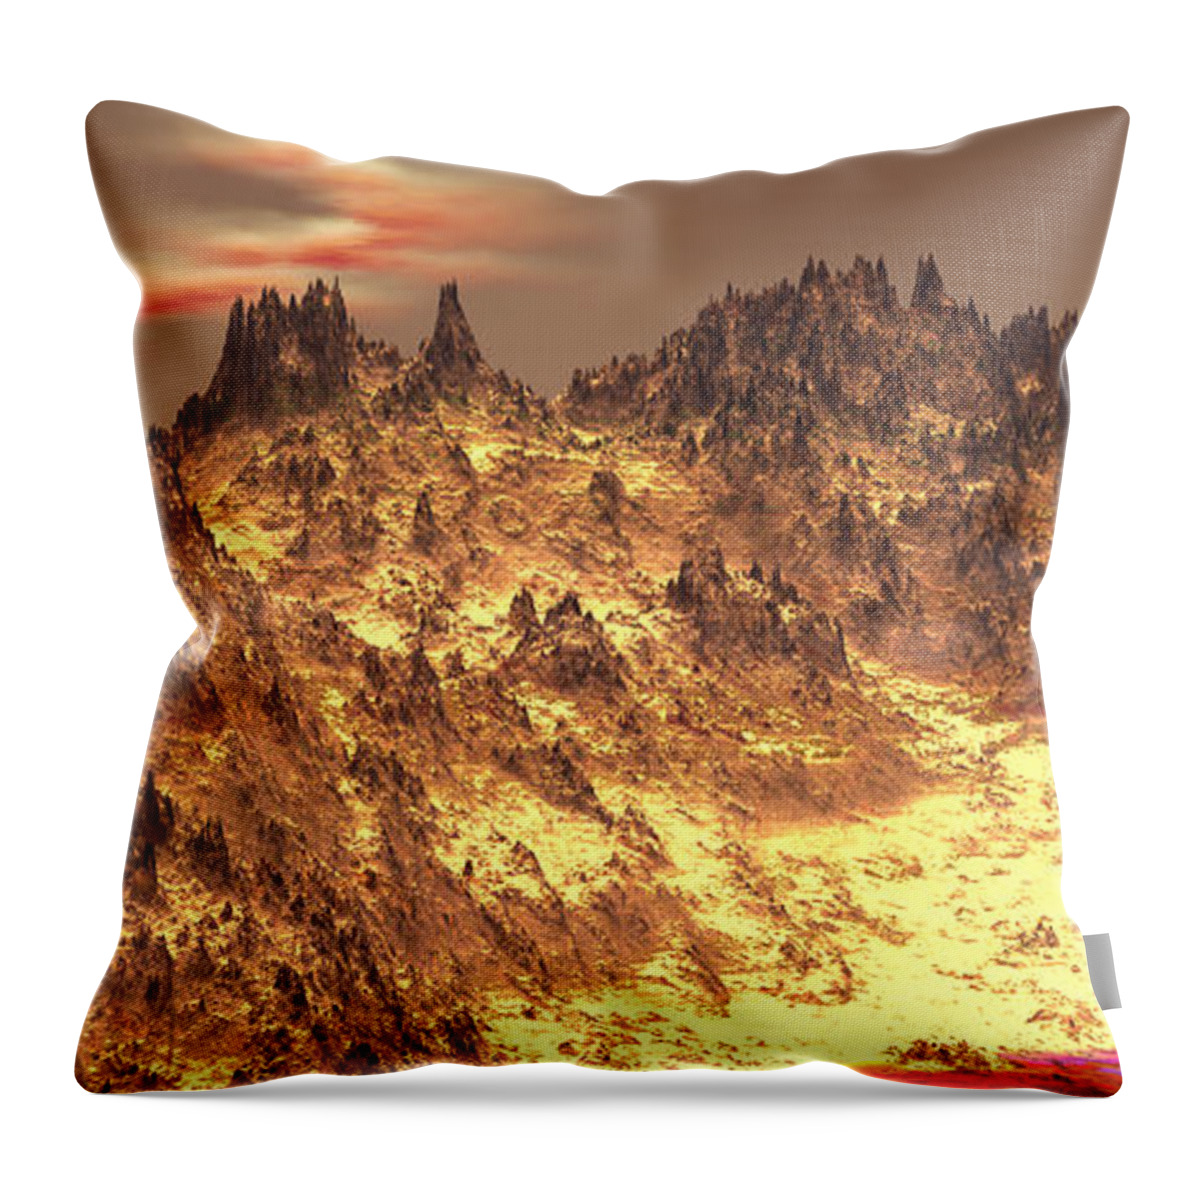 Exoplanet Throw Pillow featuring the digital art Exo-Desert by Bernie Sirelson